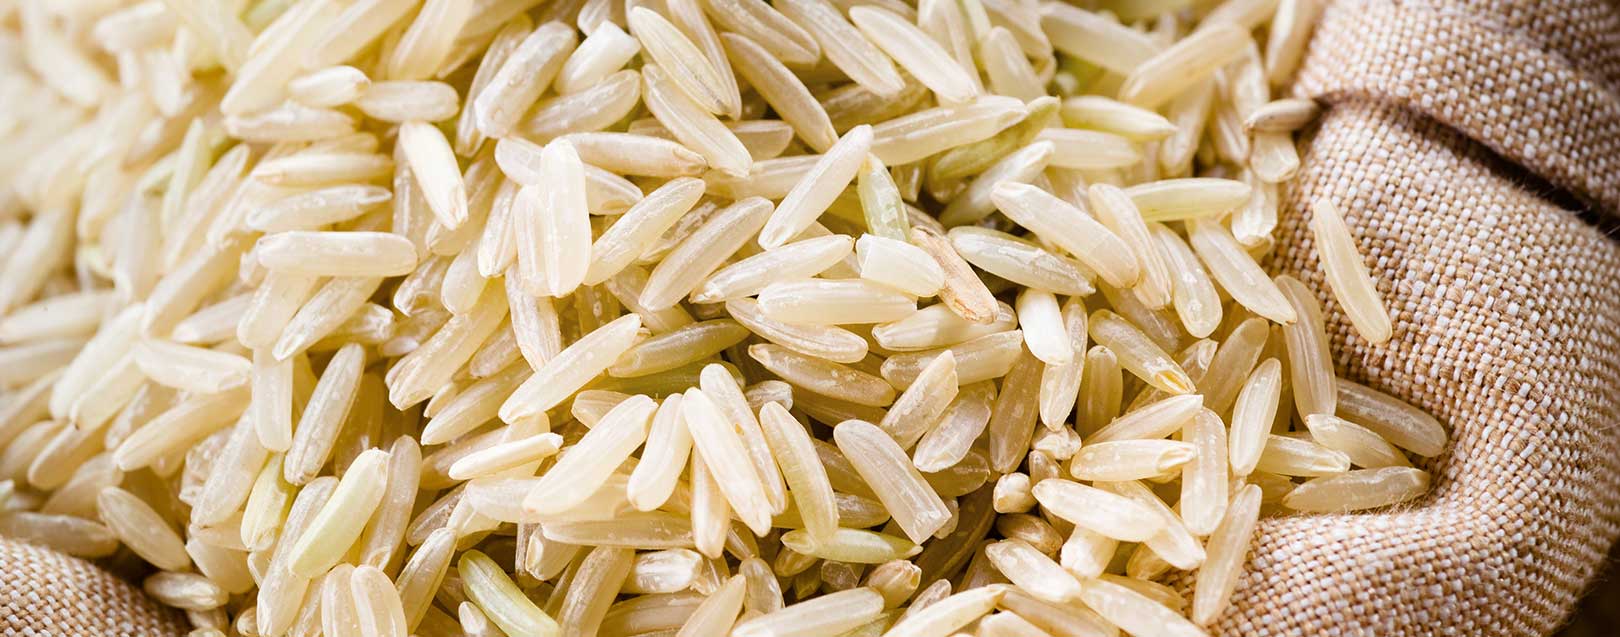 All India Rice Exporters’ Association seeks PM’s intervention to revoke EU ban on basmati rice